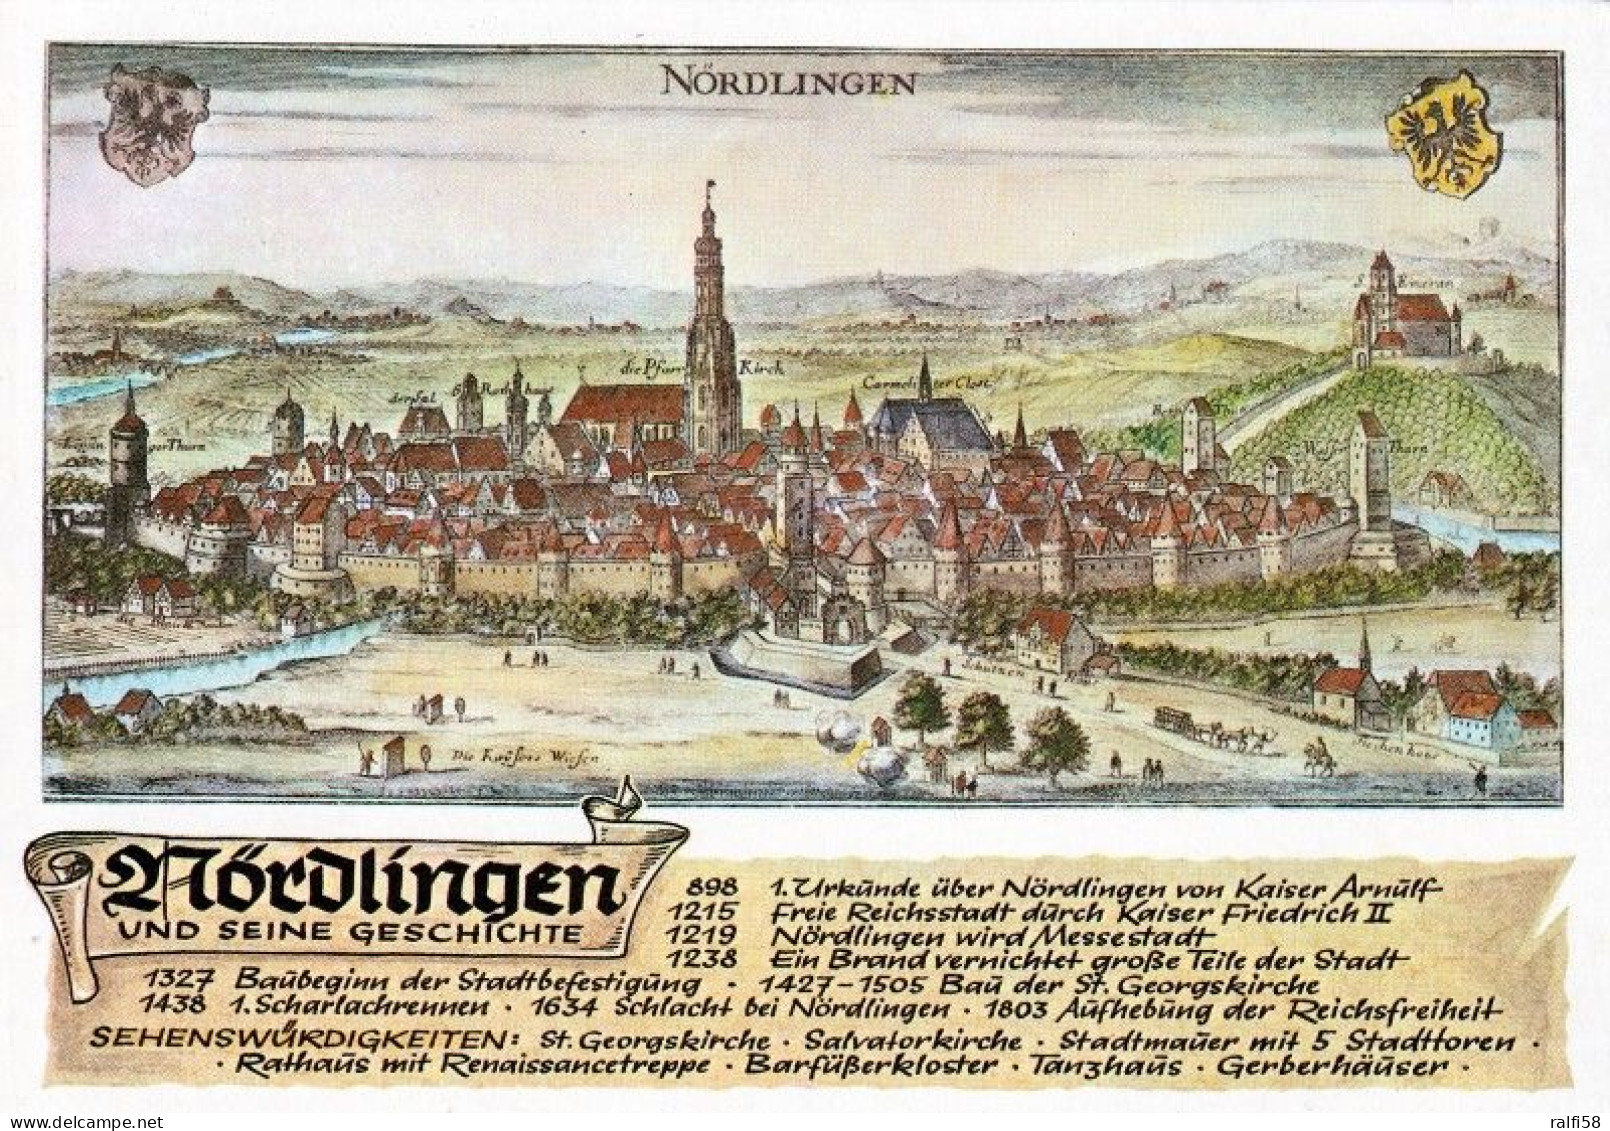 2 AK Germany / Bayern * 2 Chronikkarten Von Nördlingen, Wappen, Georgskirche, Berger Tor, Löpsinger Tor, Merian Stich * - Nördlingen